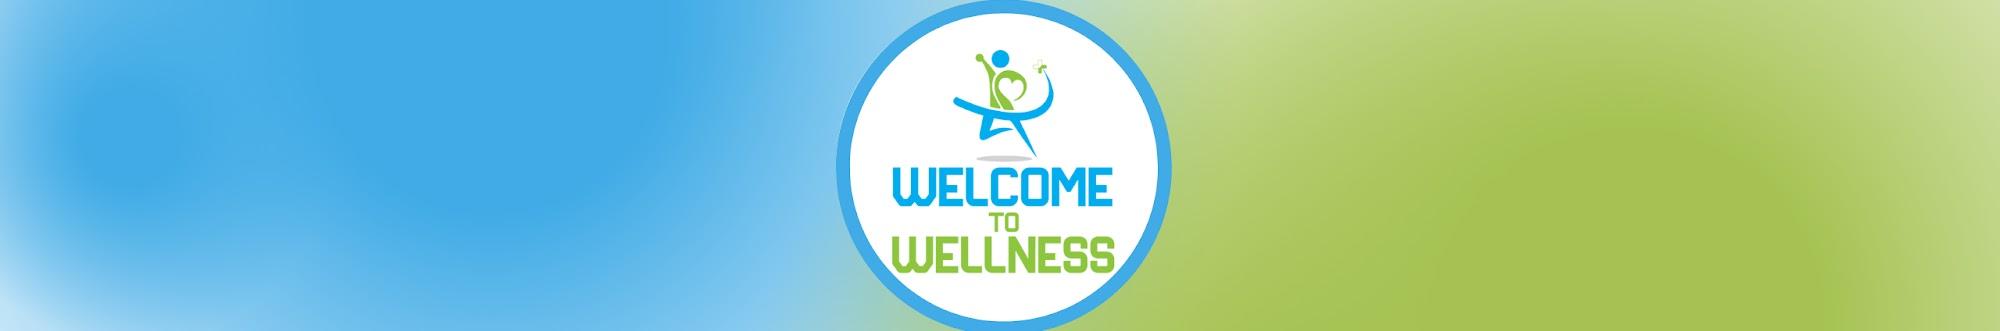 Welcome to Wellness